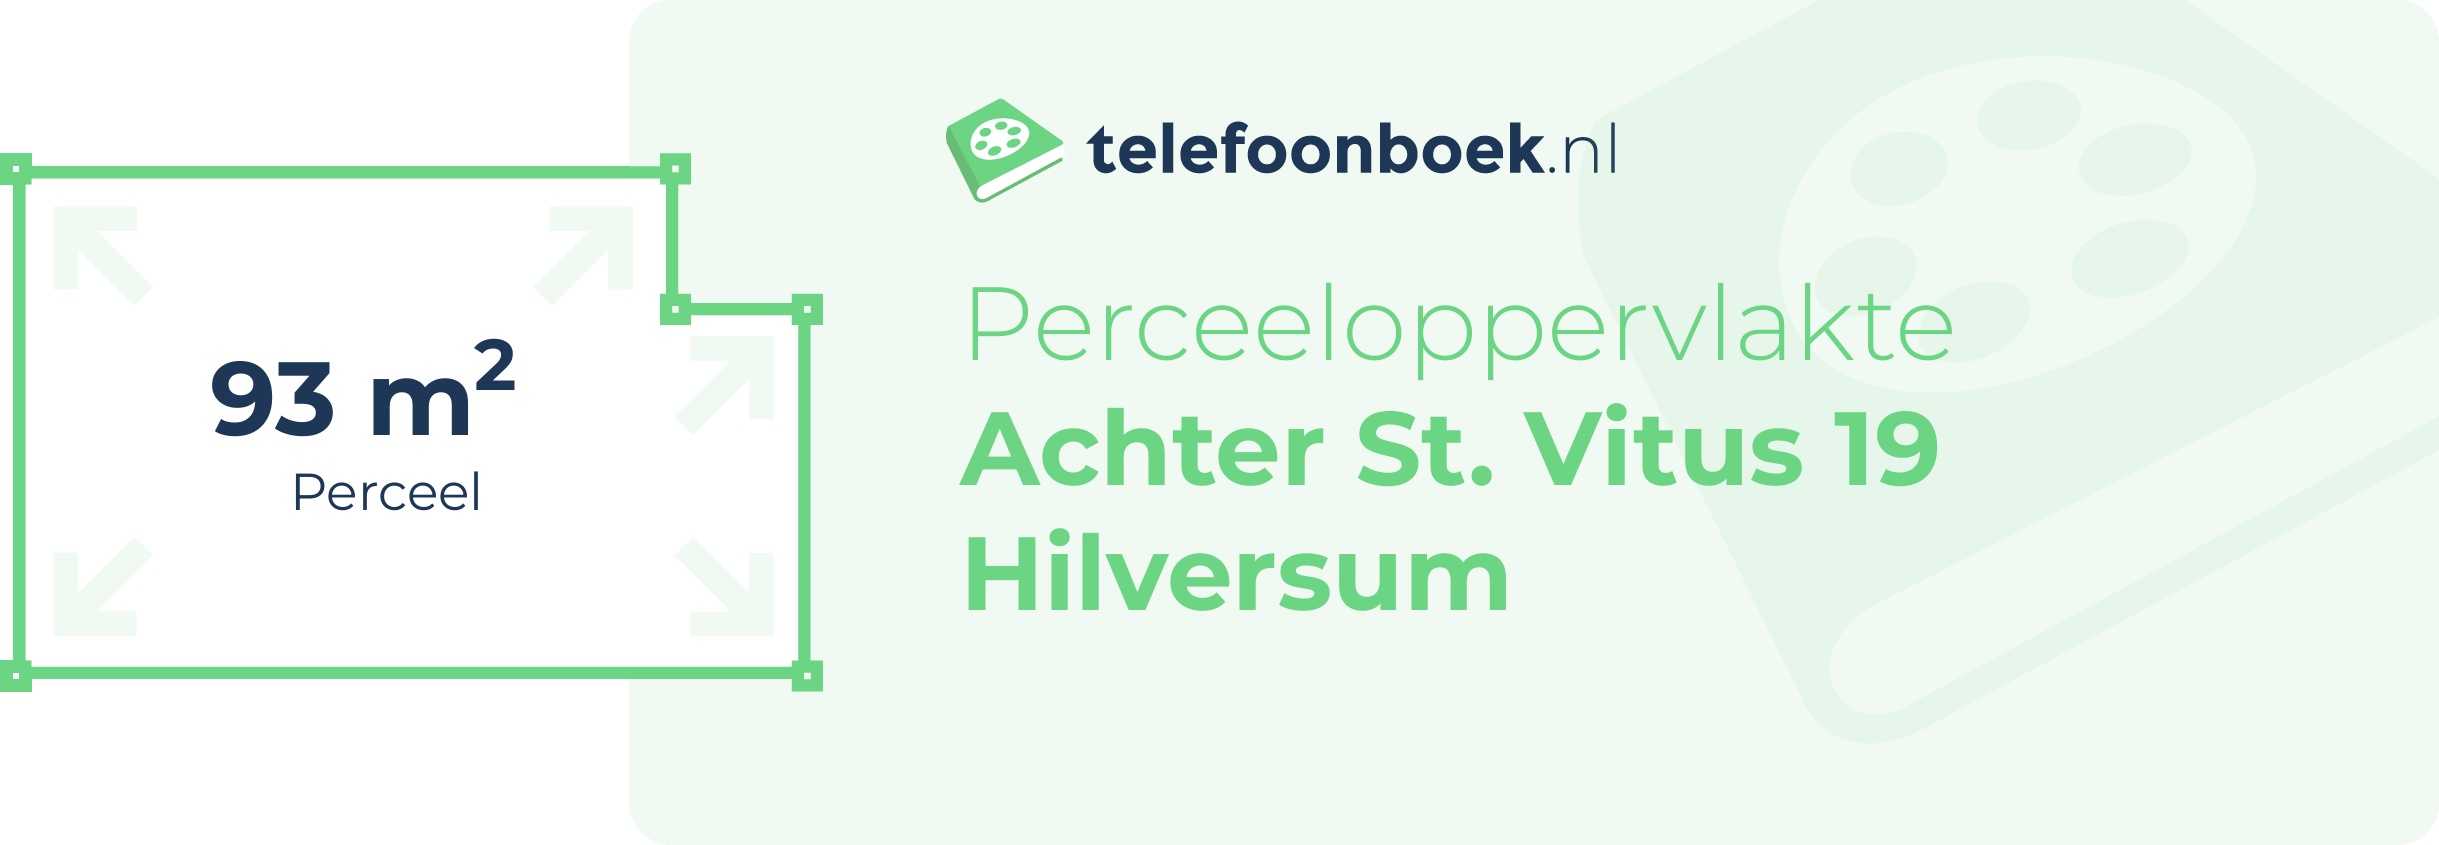 Perceeloppervlakte Achter St. Vitus 19 Hilversum